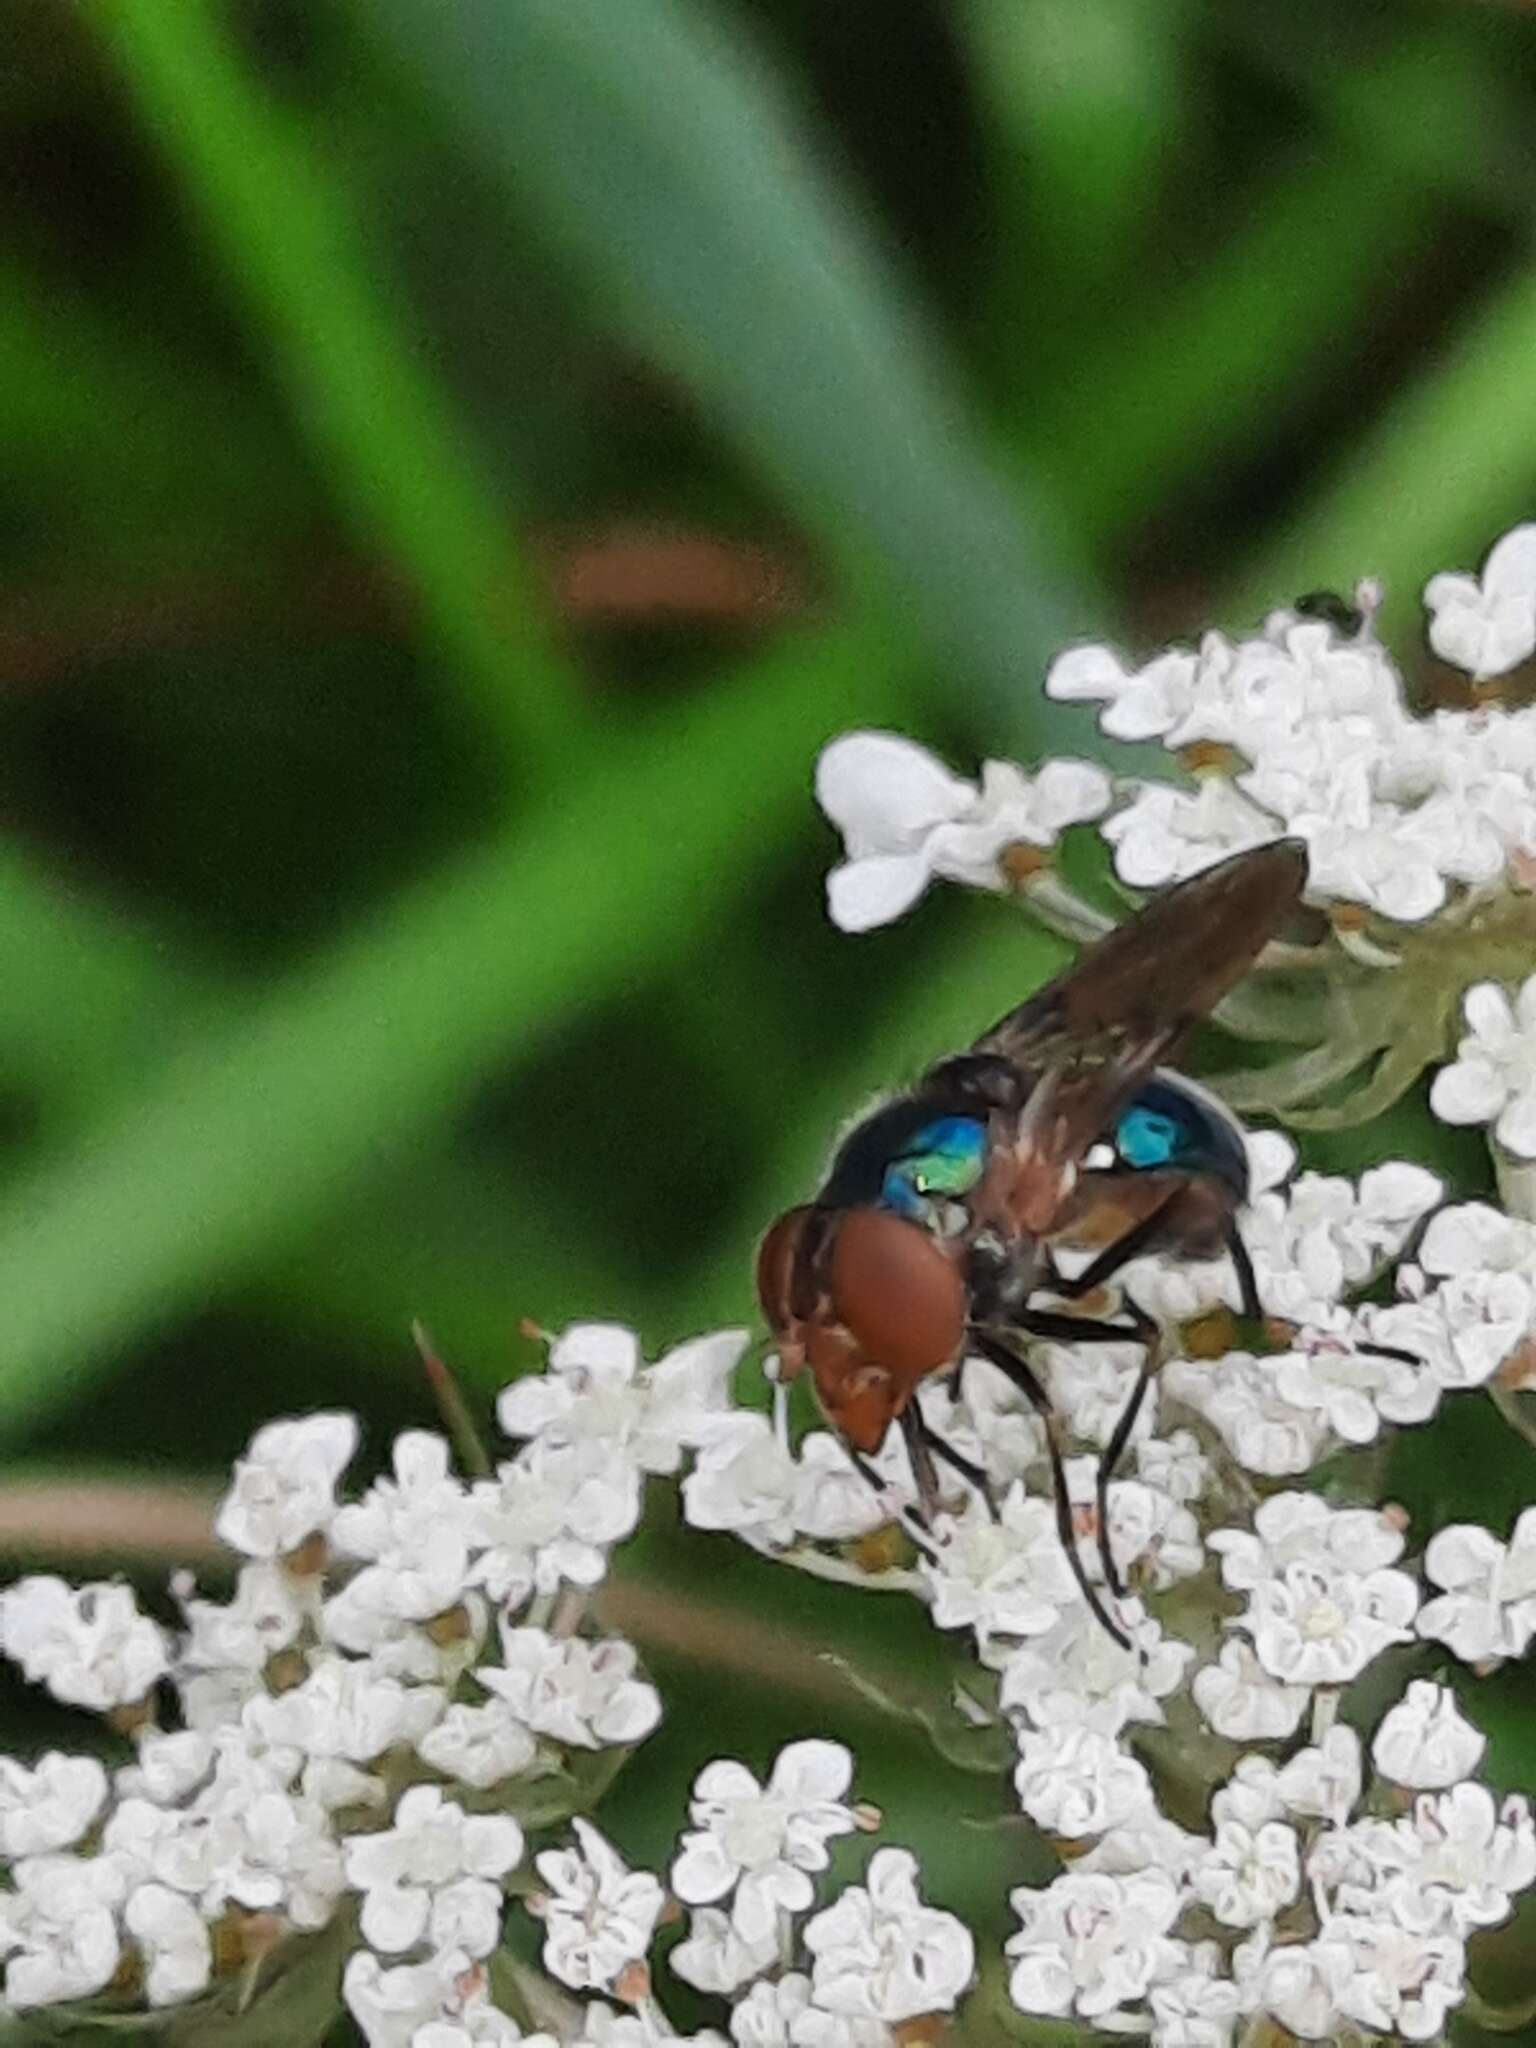 Image of Violet Bromeliad Fly